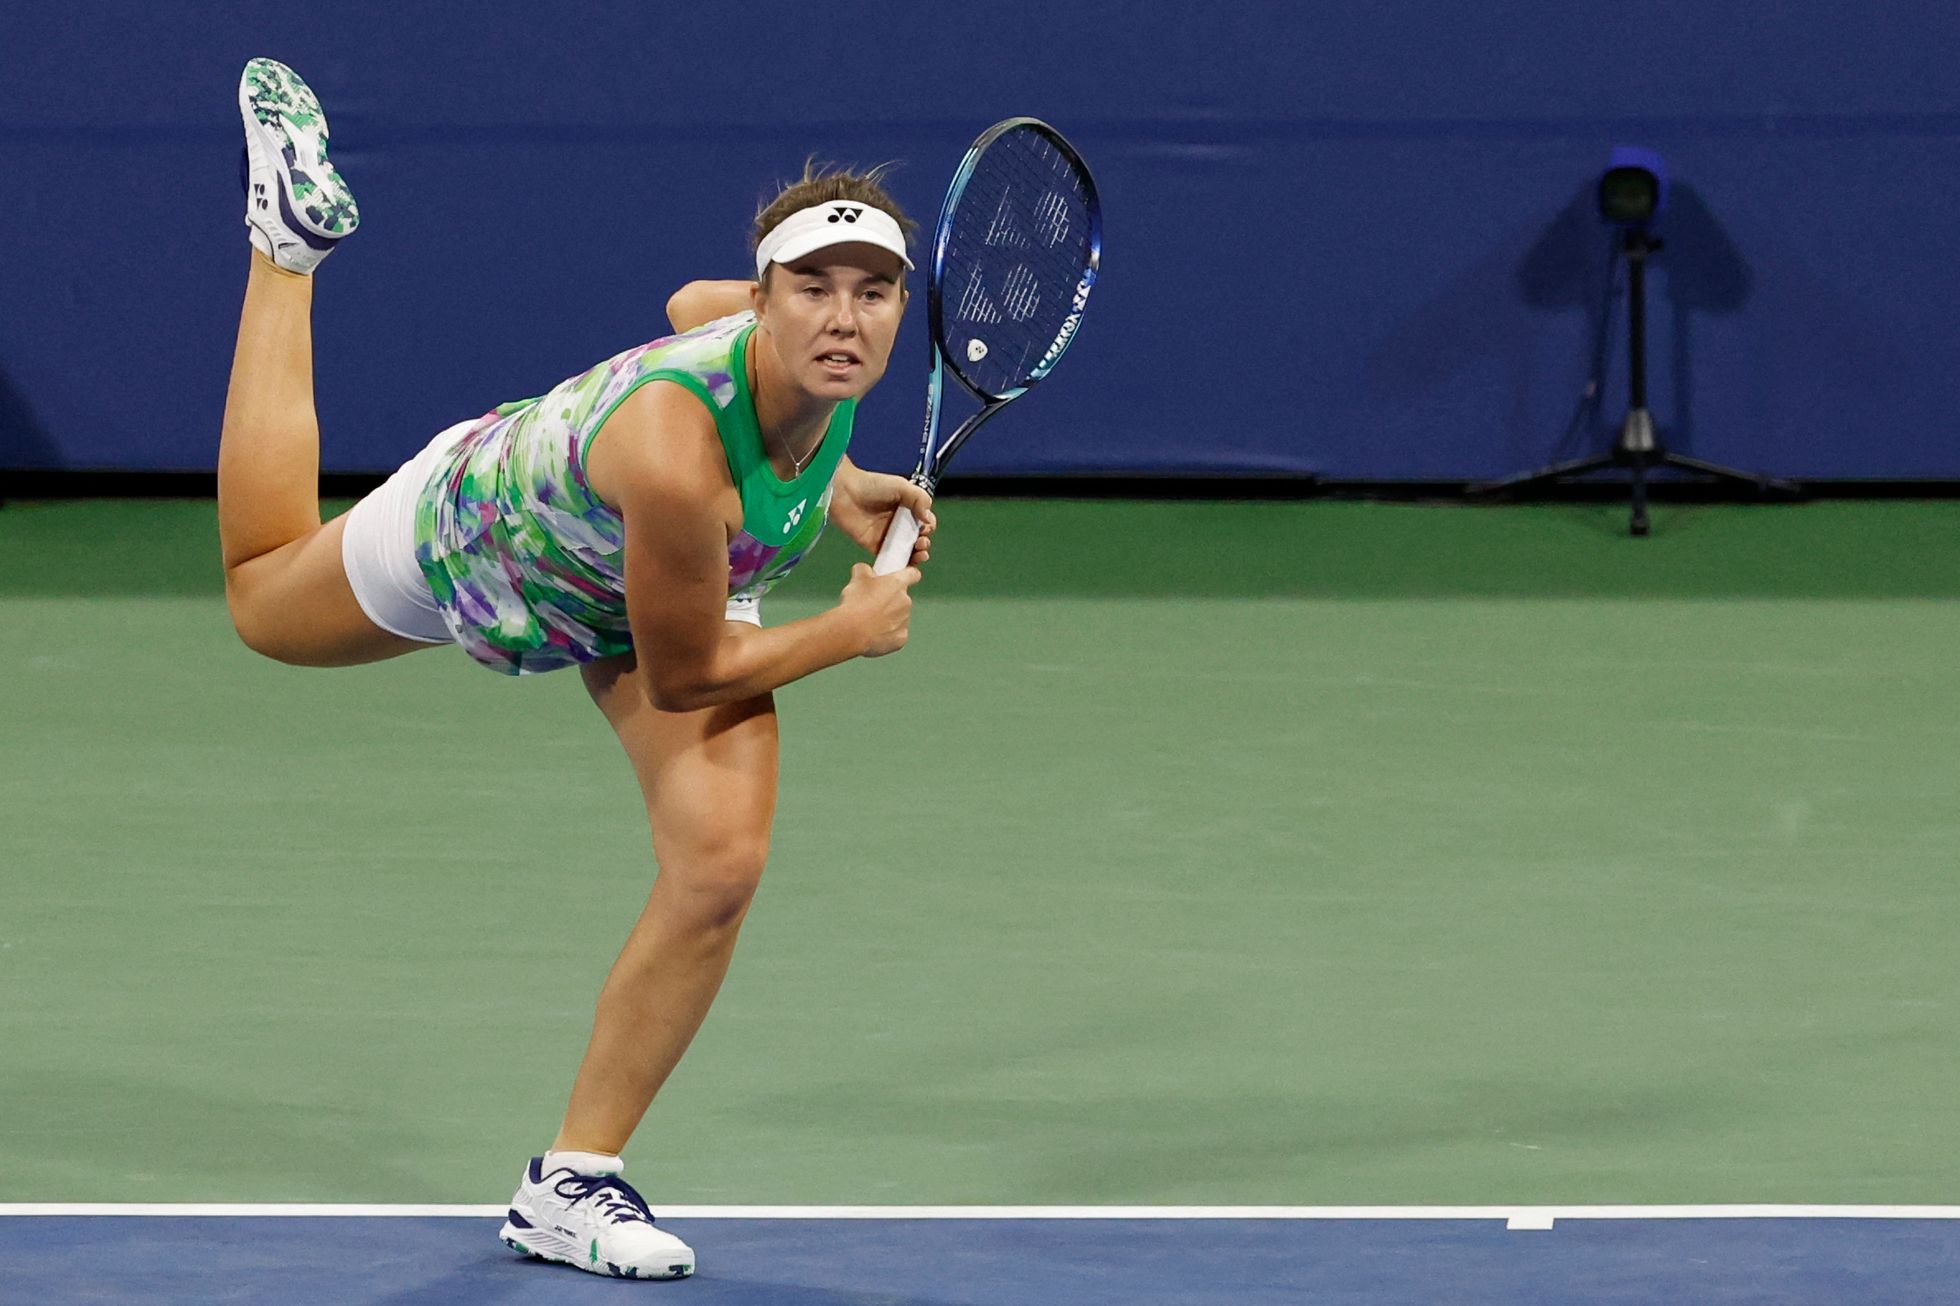 18-Year-Old Tennis Player Linda Nosková Receives Hateful Messages After Tokyo Defeat